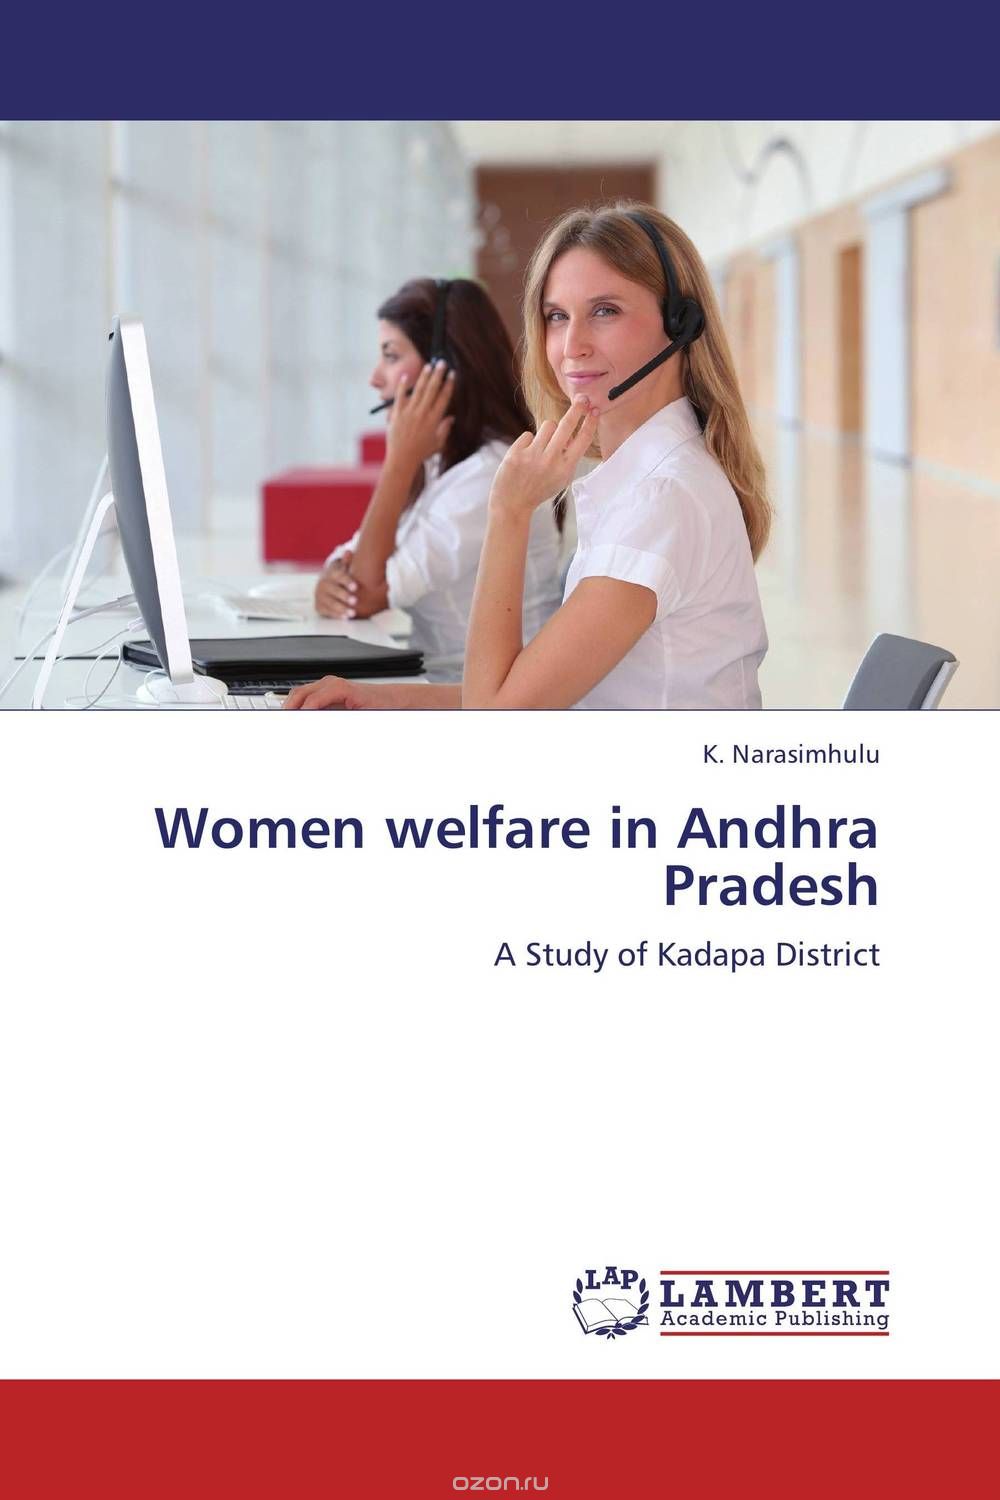 Скачать книгу "Women welfare in Andhra Pradesh"